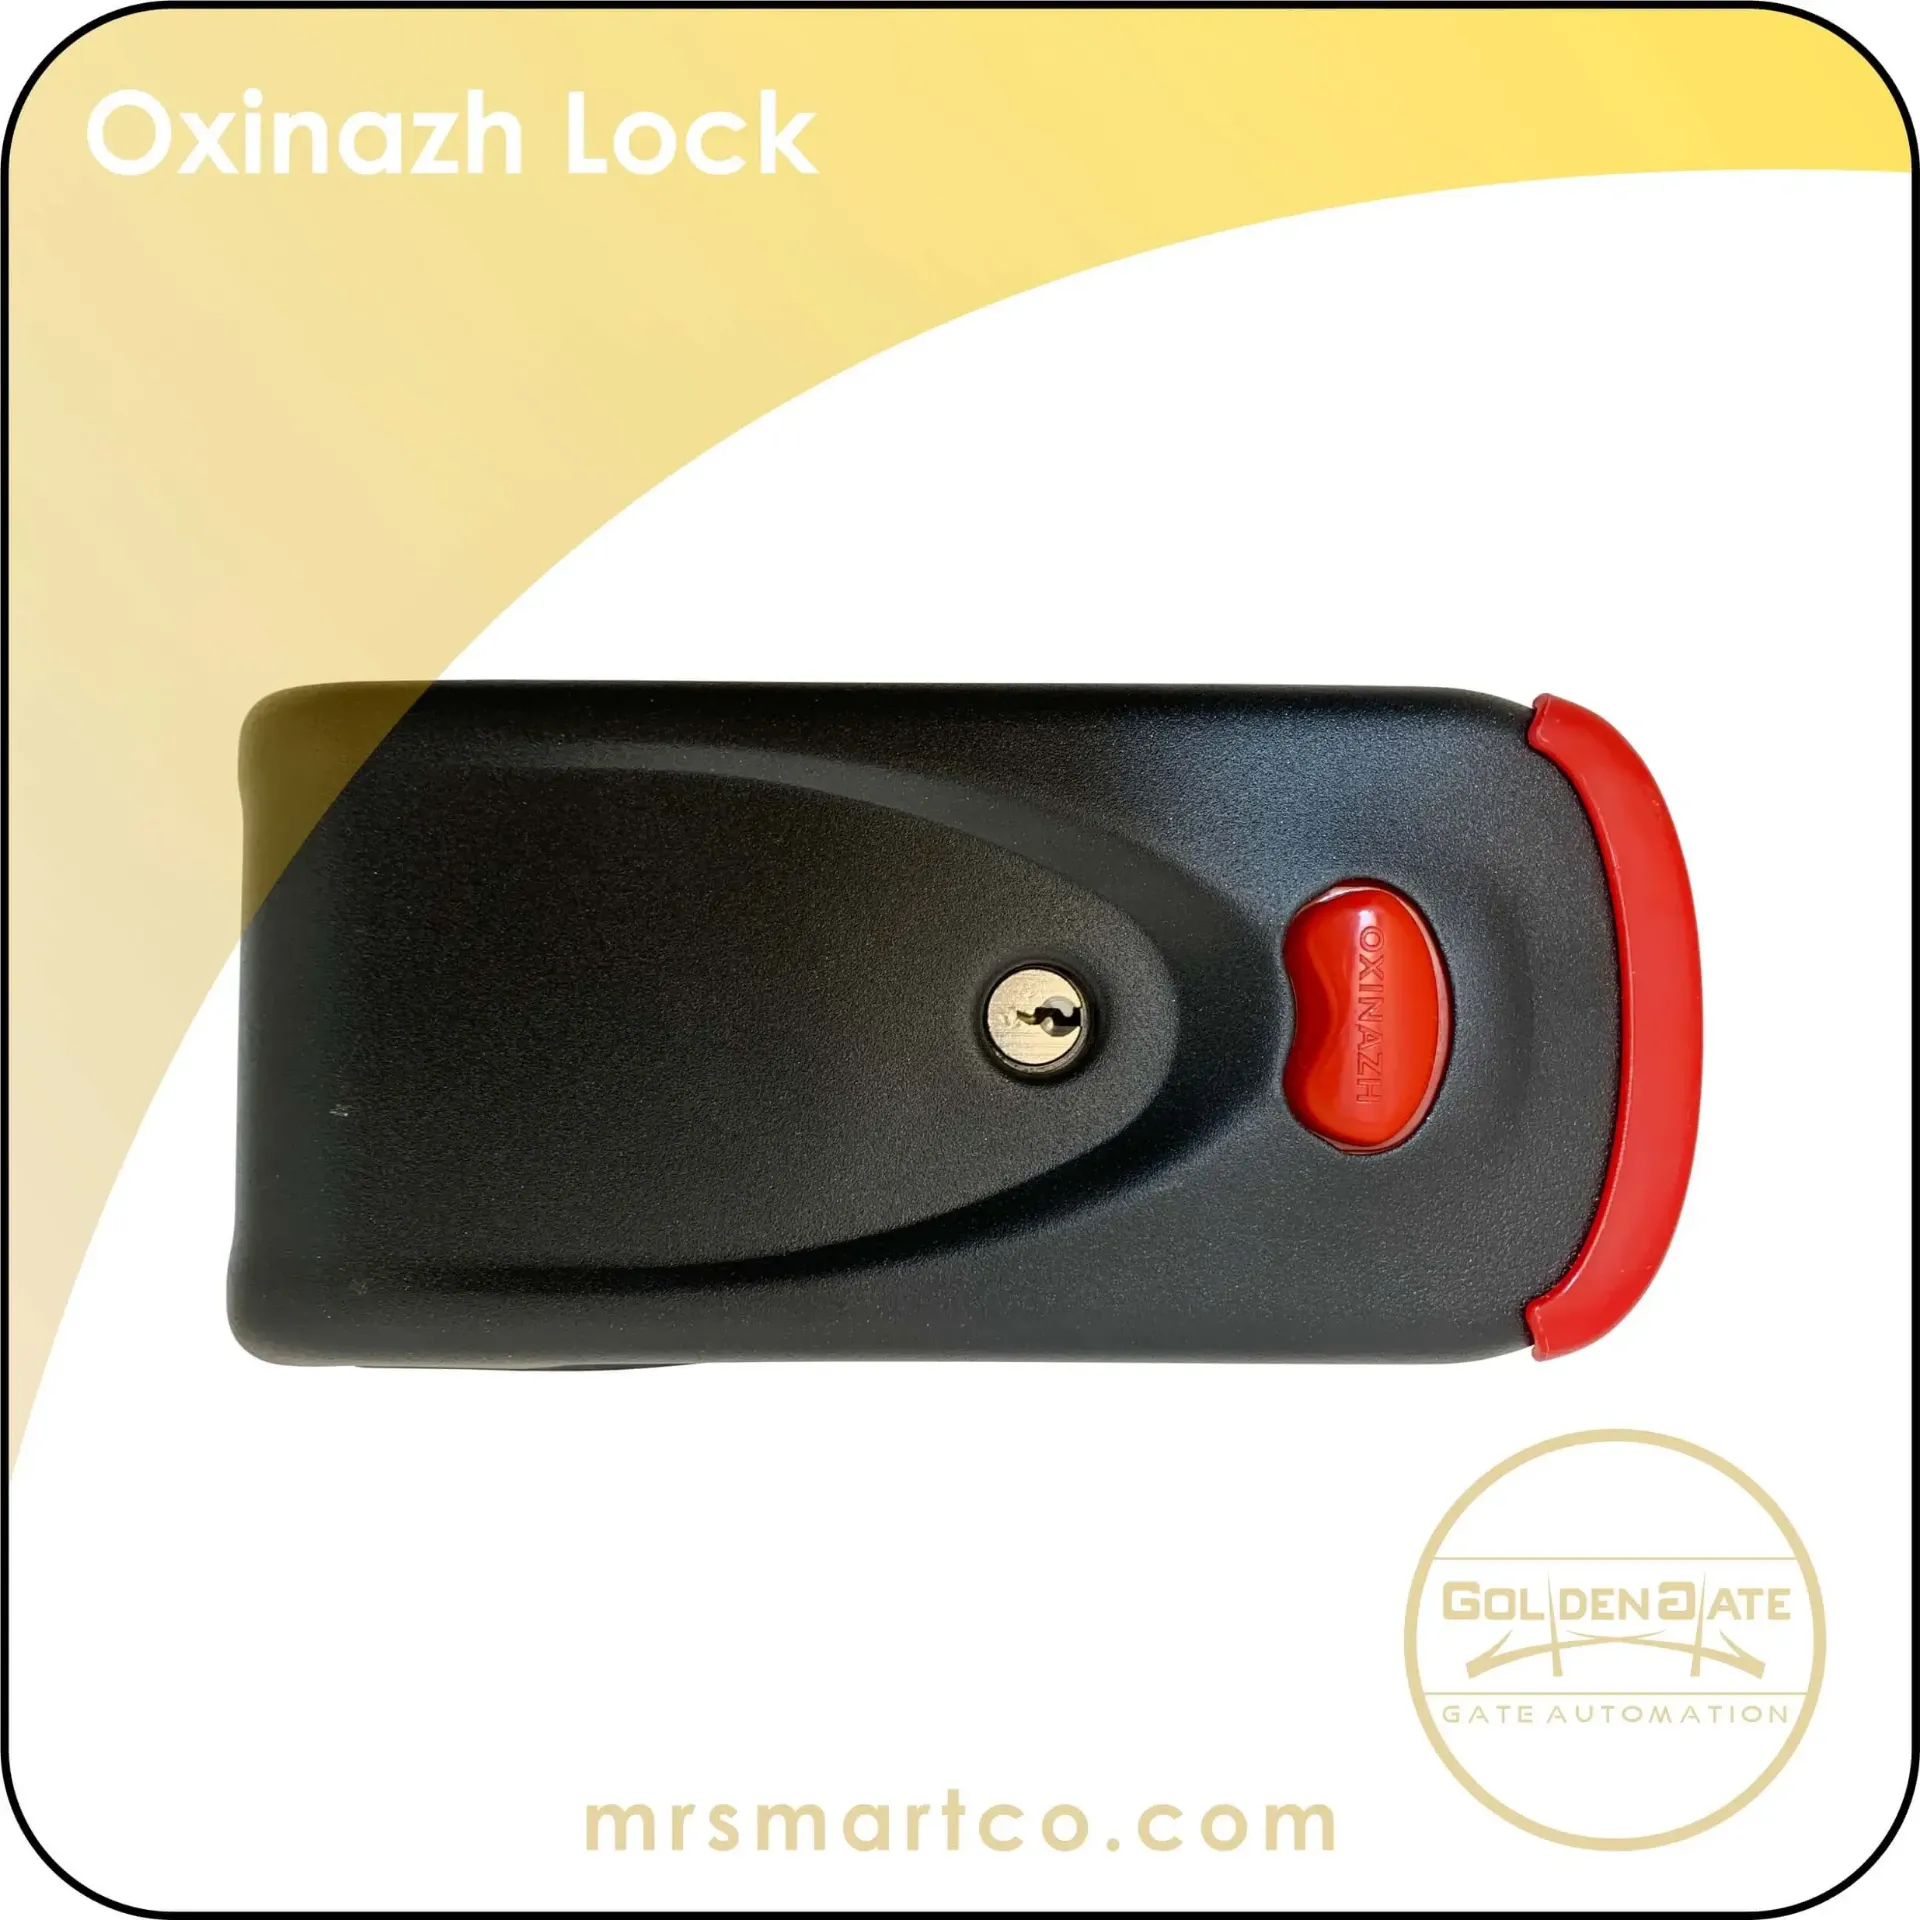 Oxinazh Lock